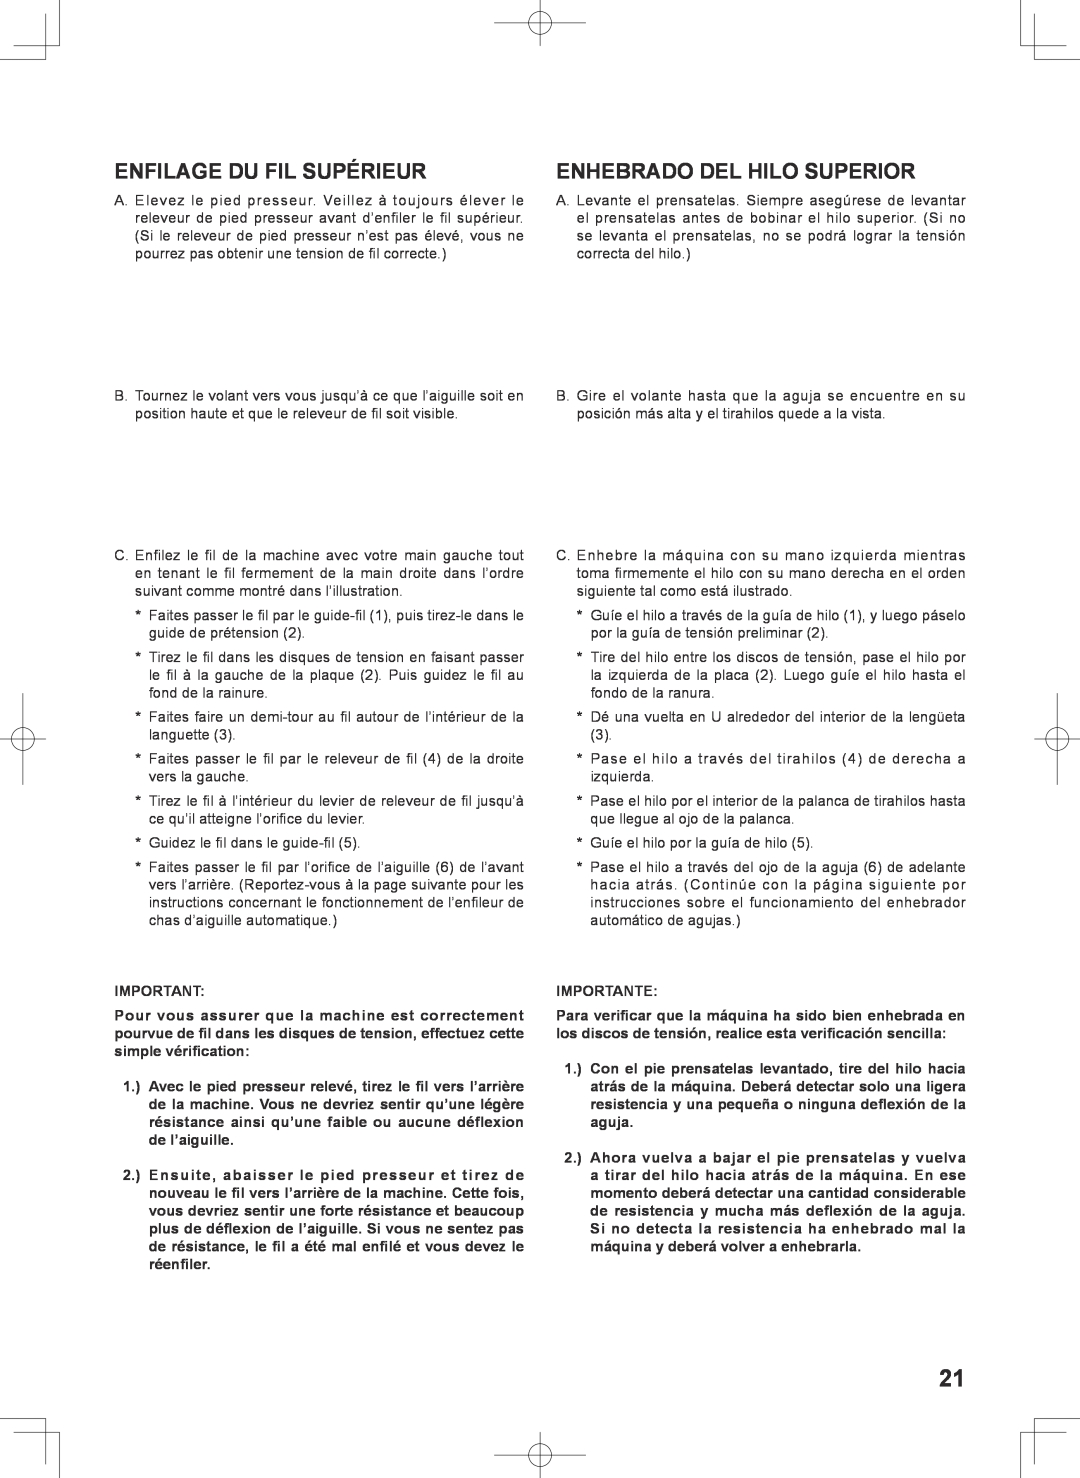 Singer 7467S instruction manual Enfilage Du Fil Supérieur, Enhebrado Del Hilo Superior 